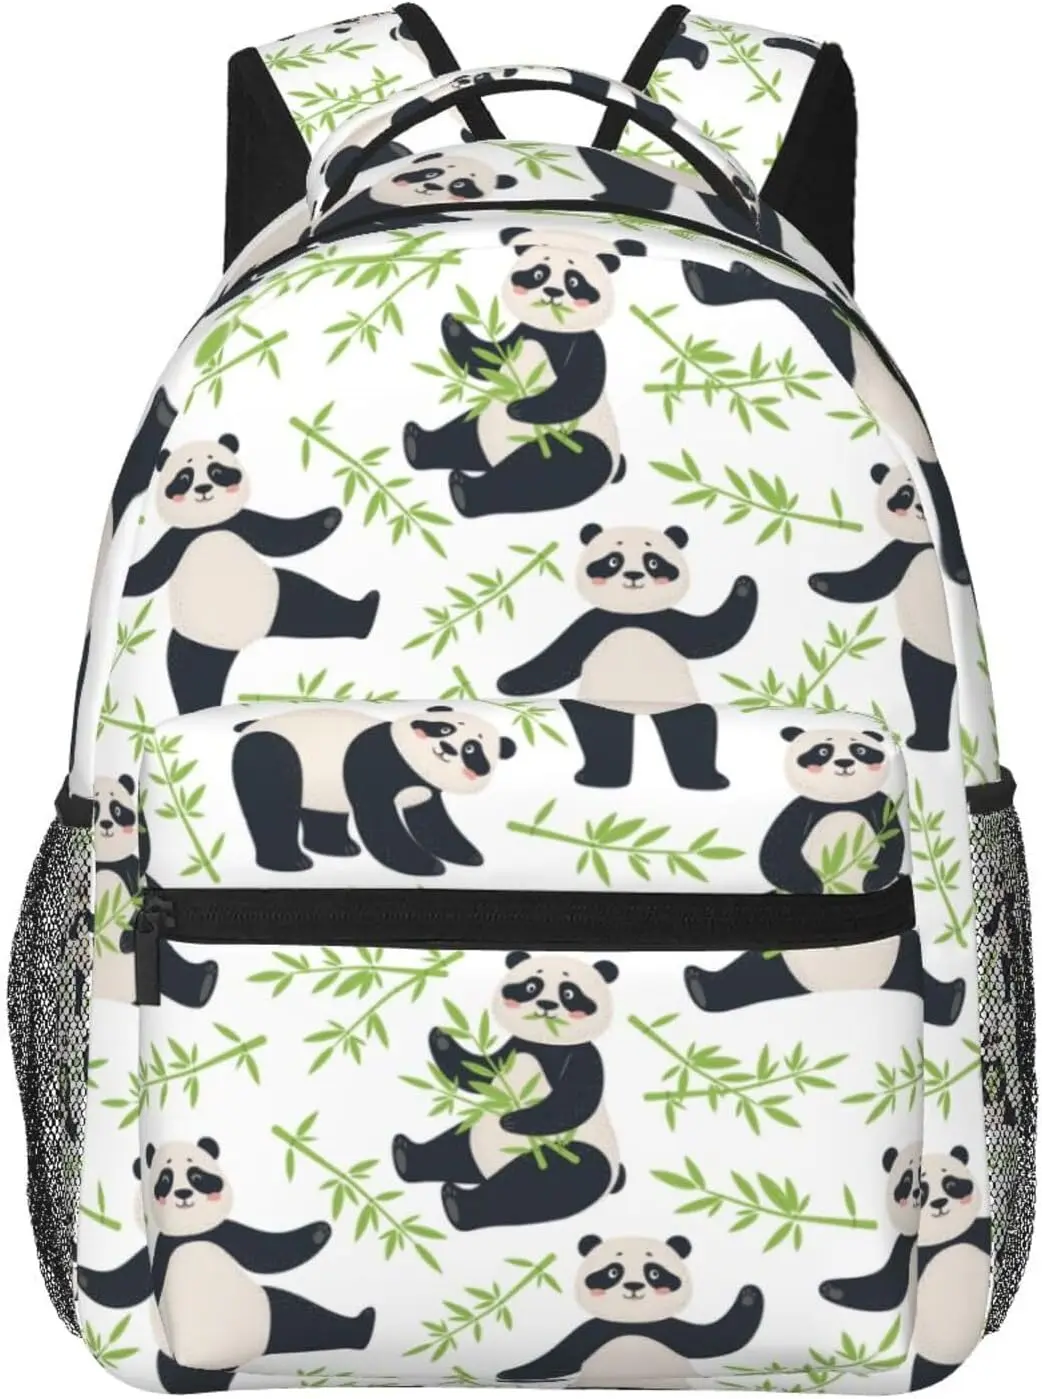 

Cute Panda Bamboo Backpack Casual Hiking Camping Travel Backpacks Lightweight Daypack Bag Women Men Bookbag